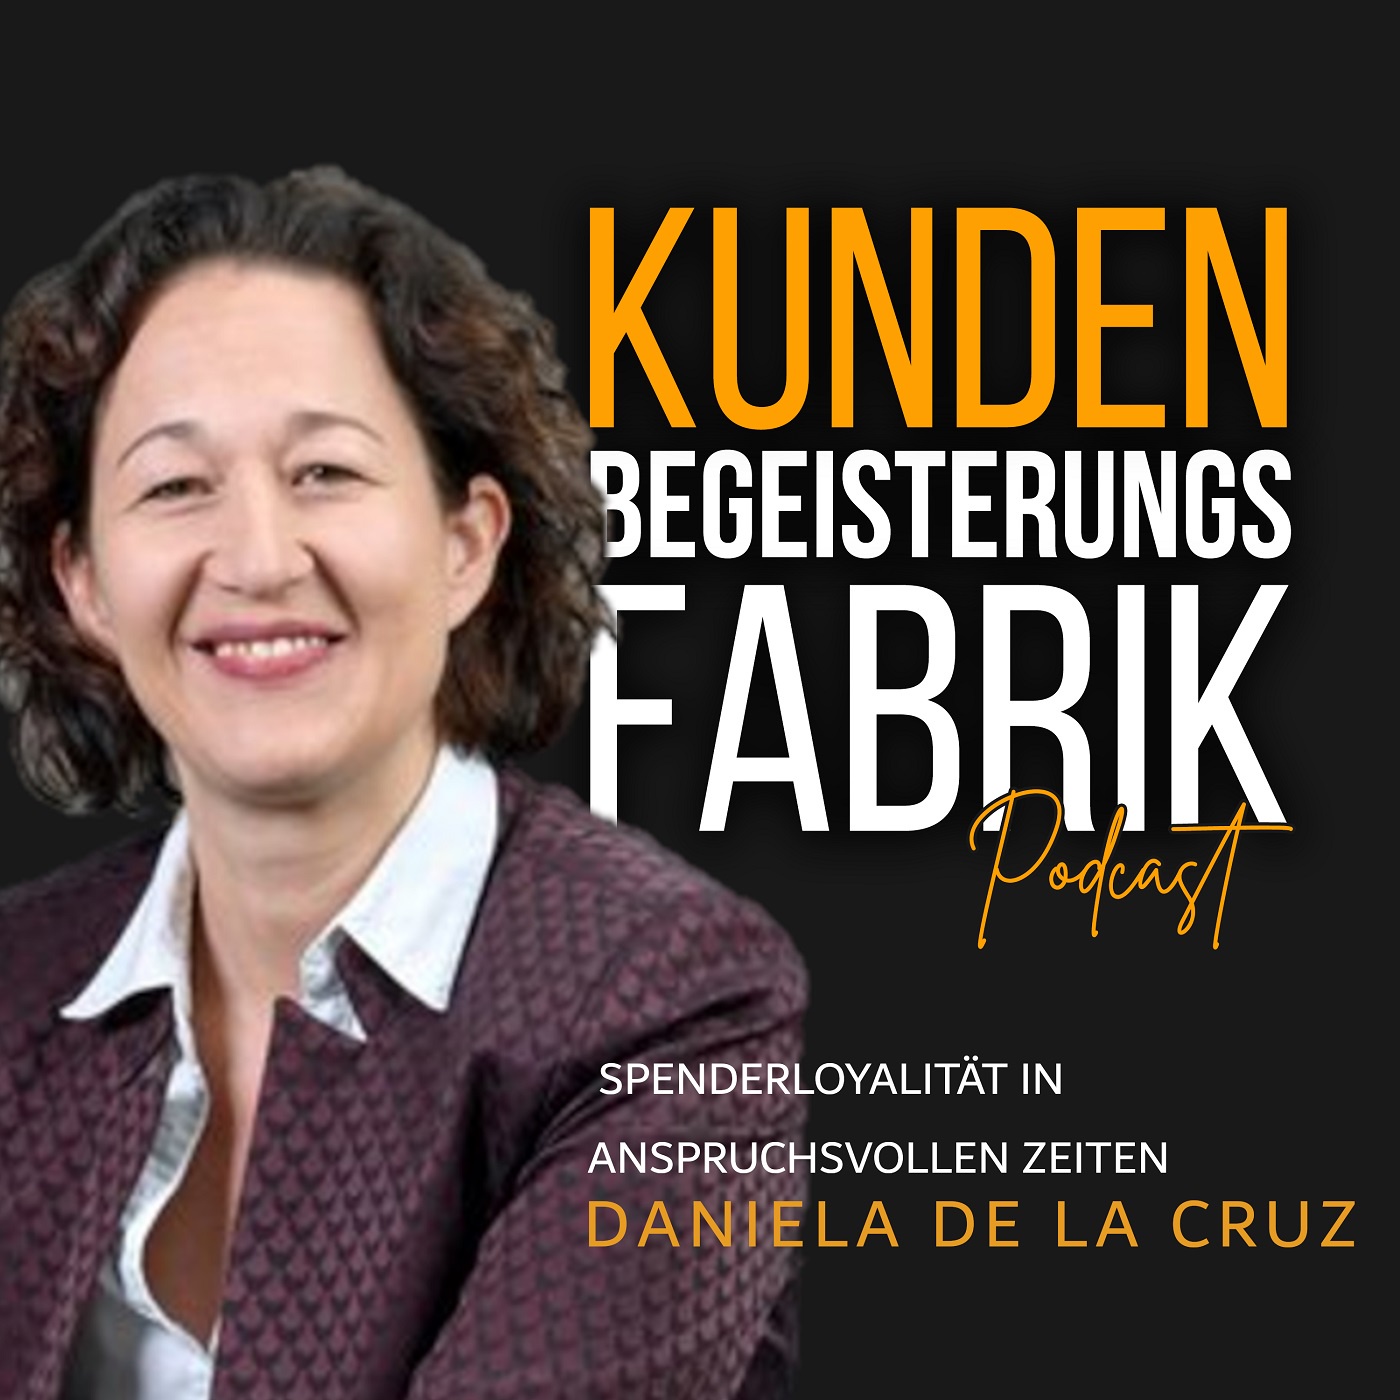 Daniela de la Cruz: Spenderloyalität in anspruchsvollen Zeiten